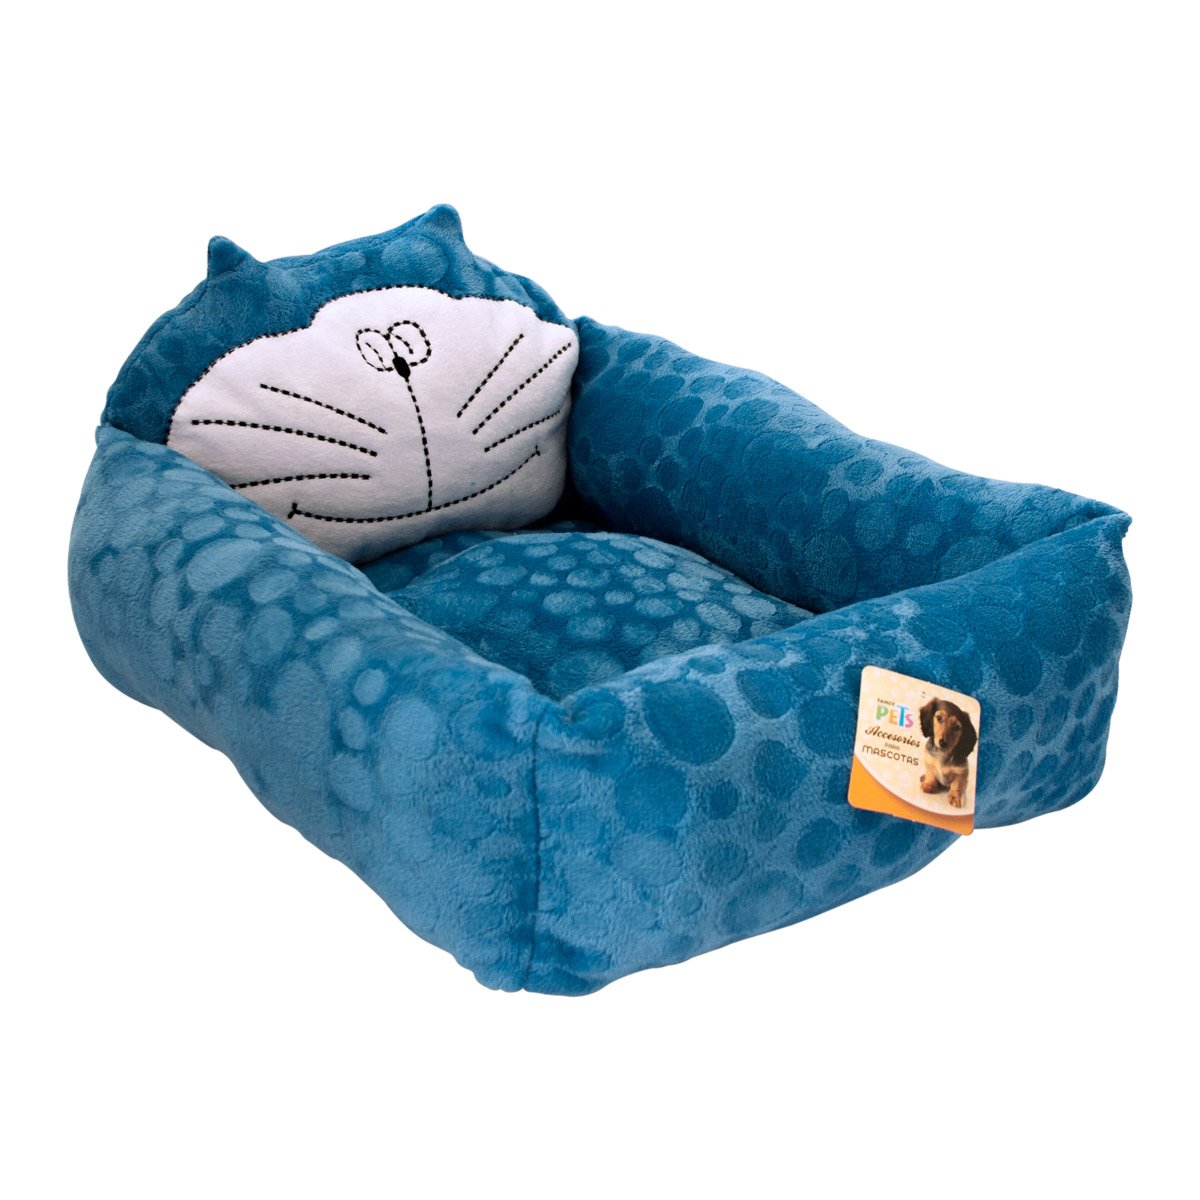 Cama Animalitos - Gato Azul Fancy Pets Mod. Tx10522